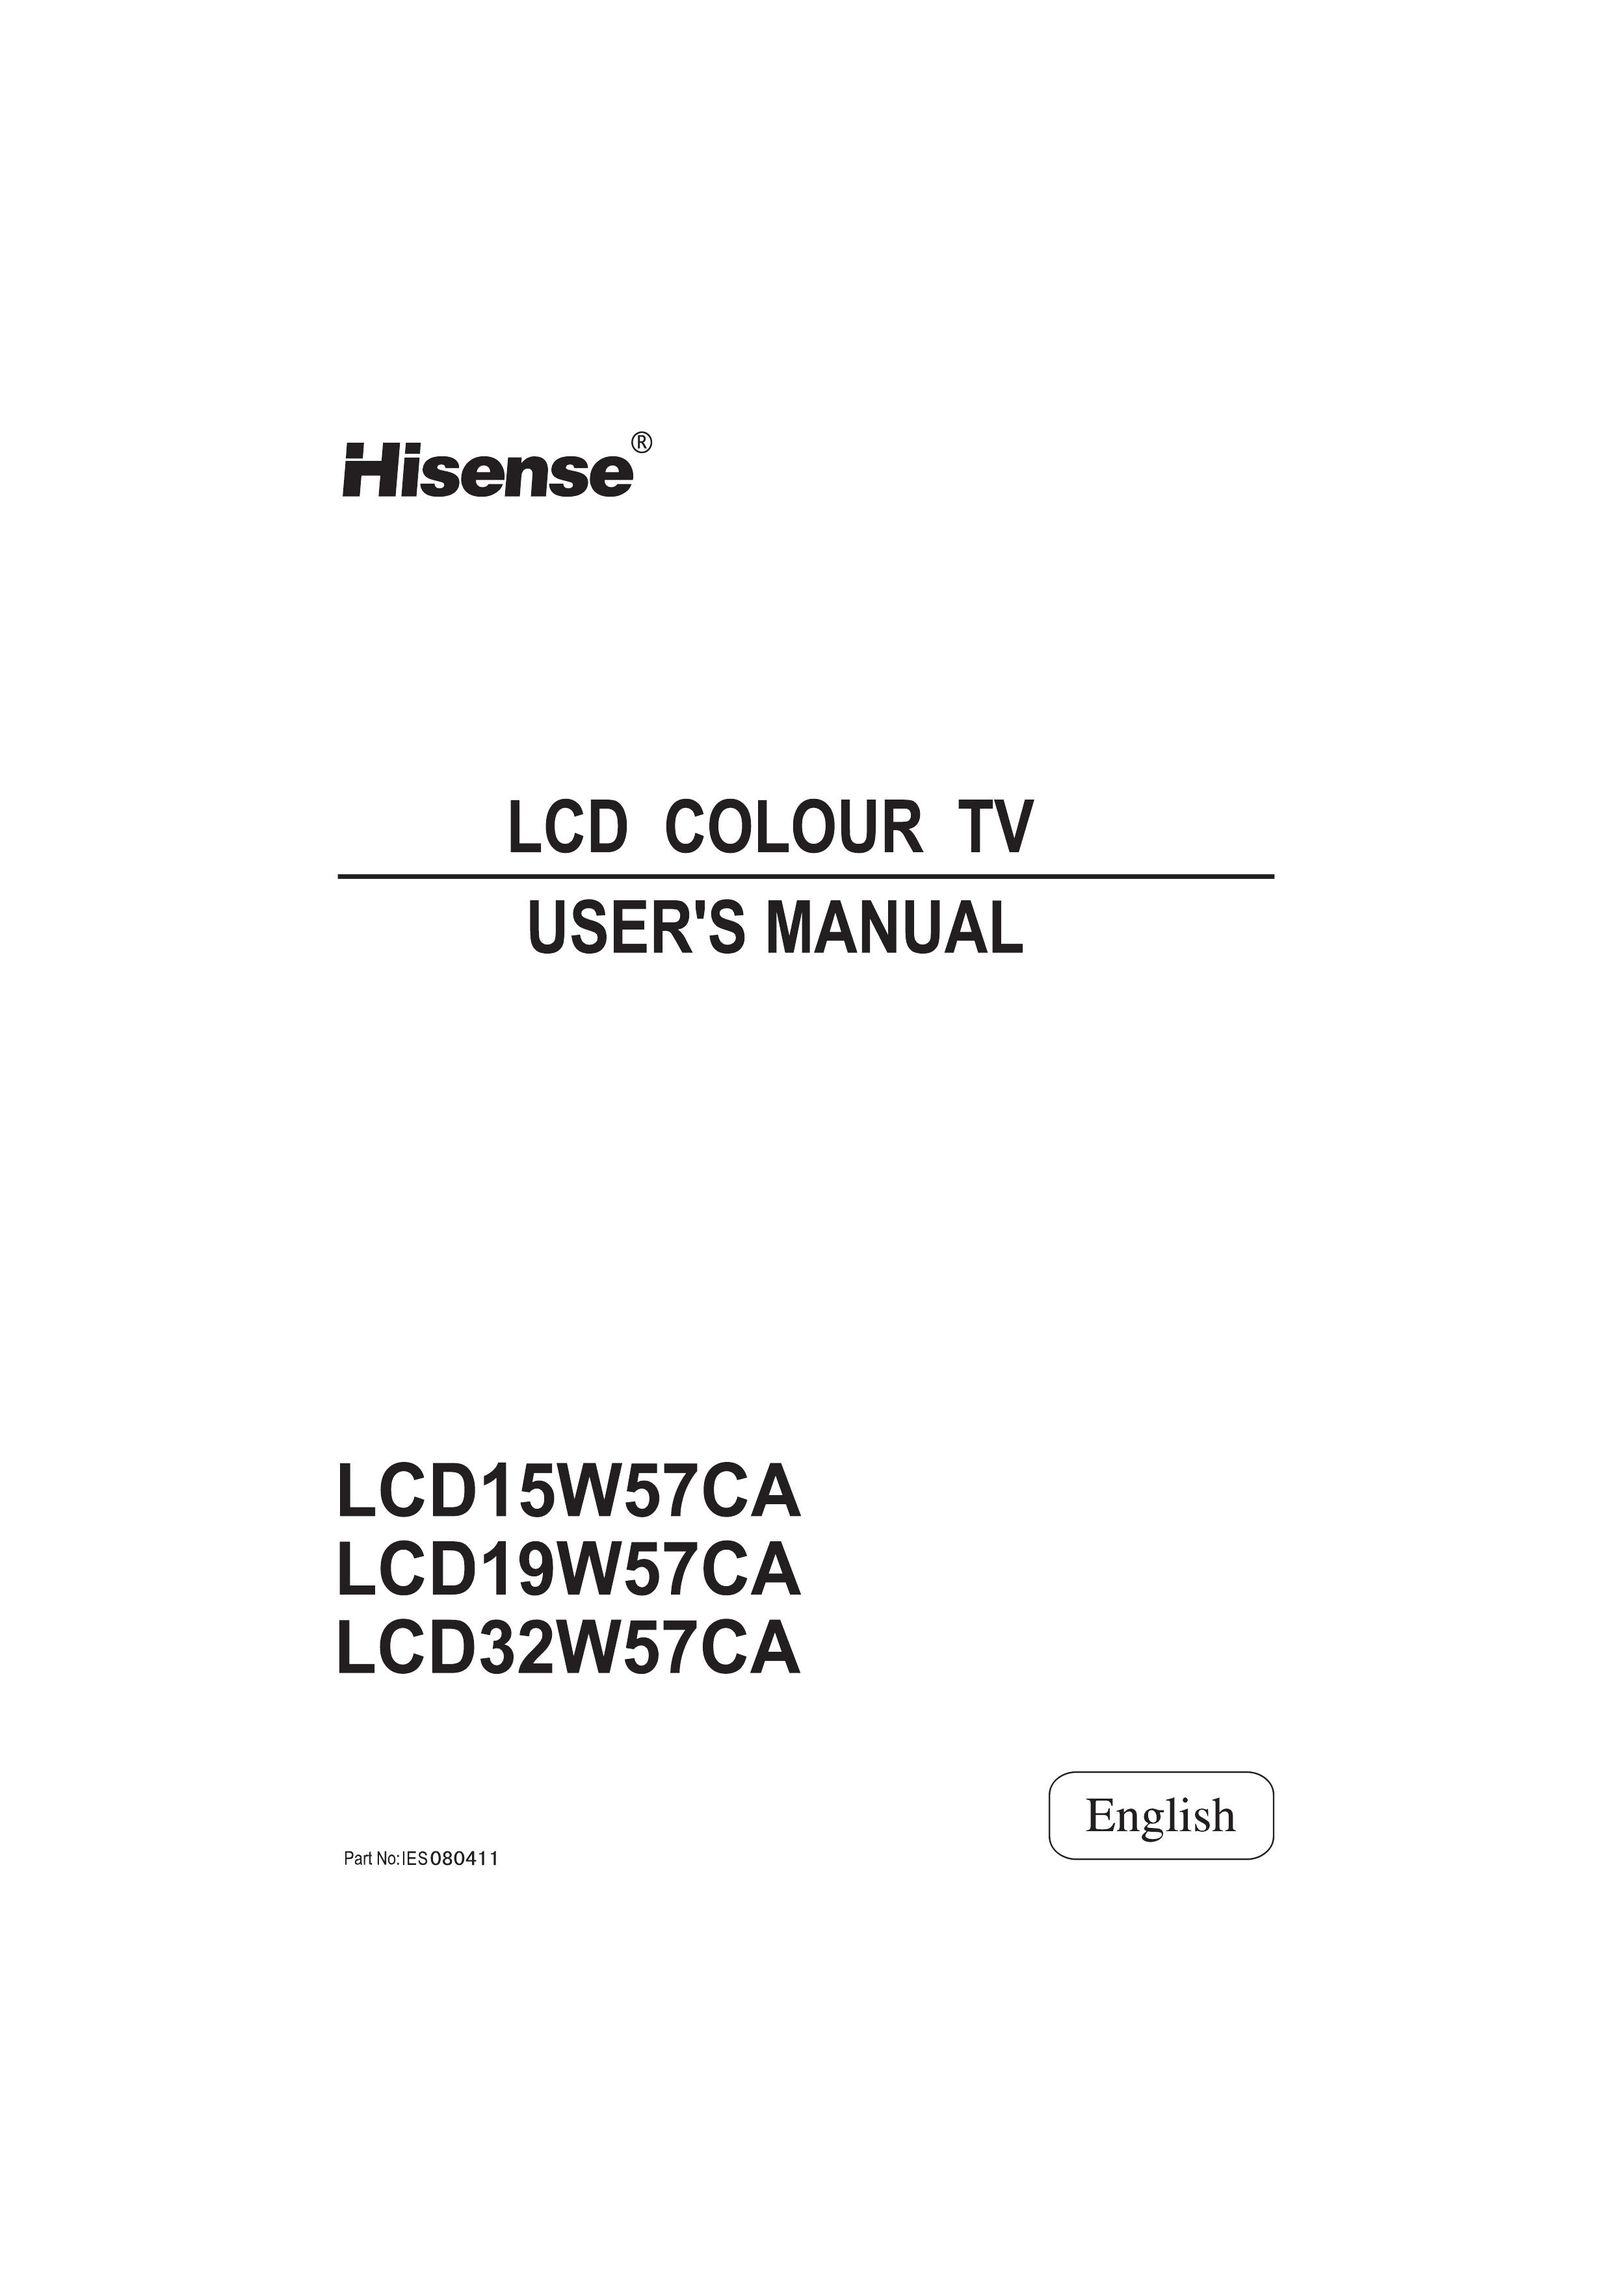 Hisense LCD19W57CA Flat Panel Television User Manual